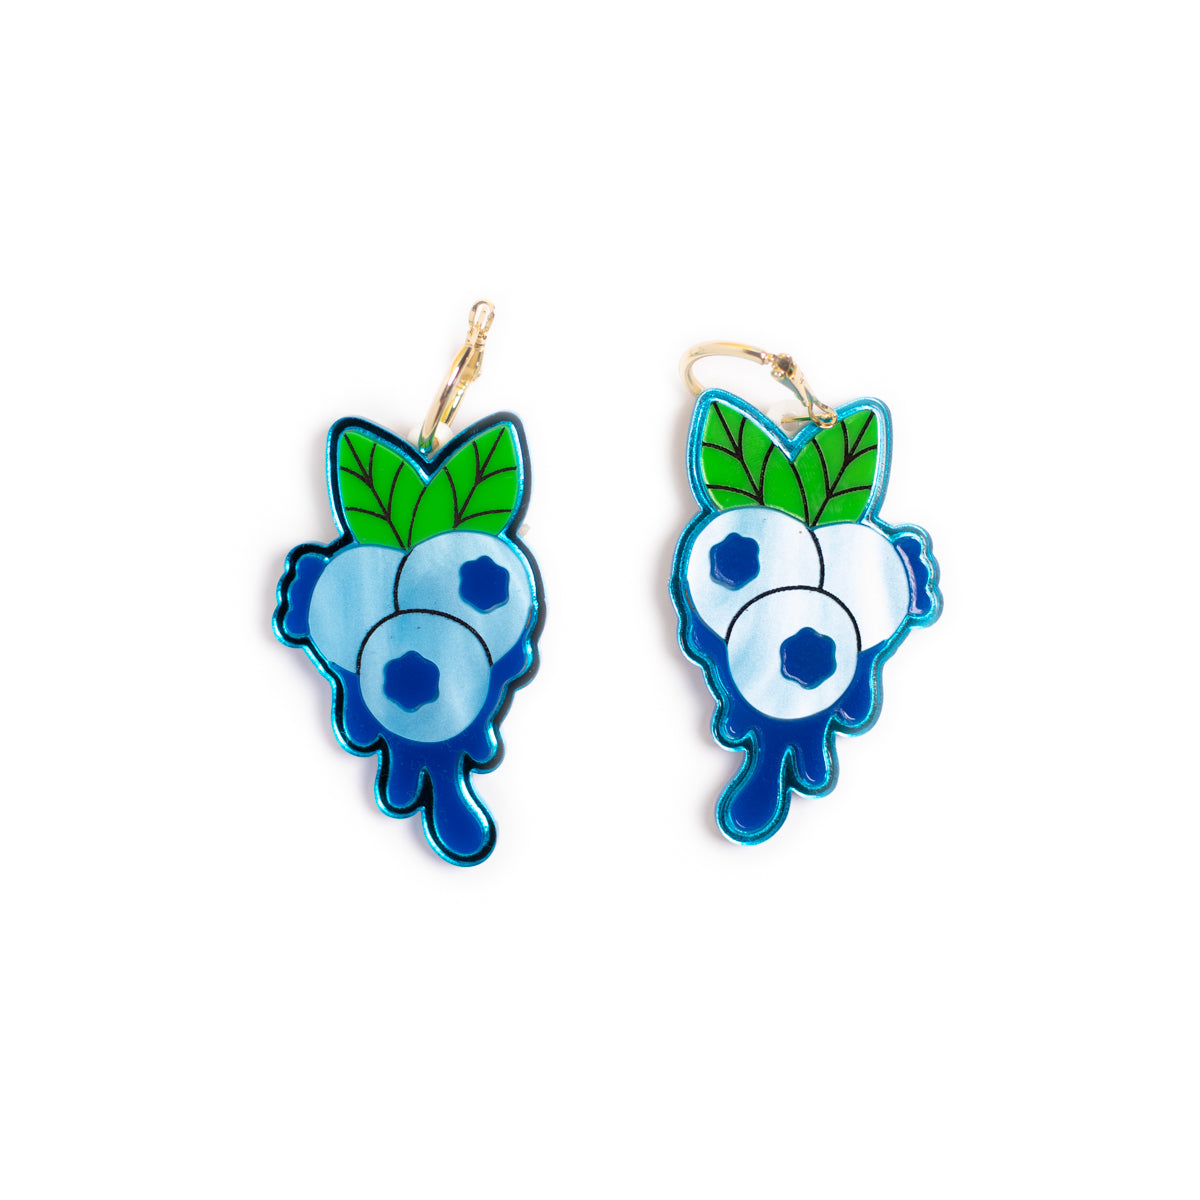 The Blueberry Earrings